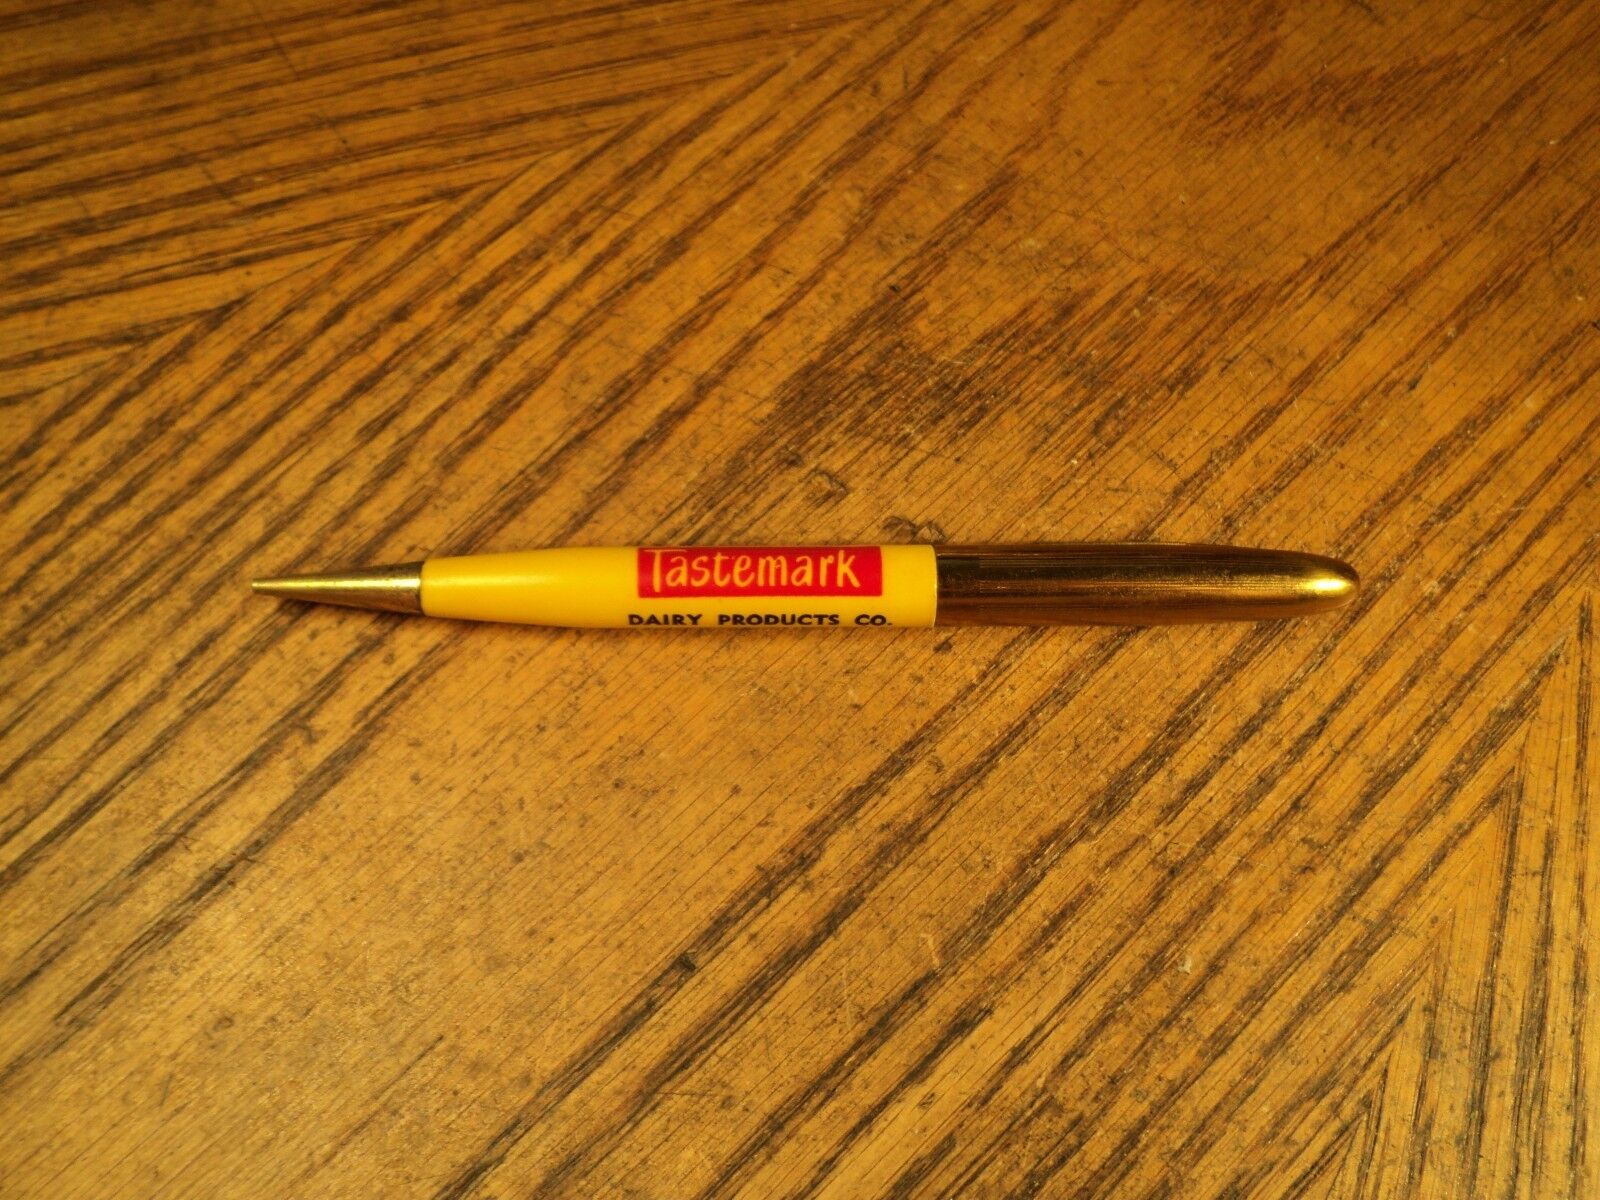 Vintage Mechanical Pencil      Tastemark Dairy Products Co    Joplin Missouri